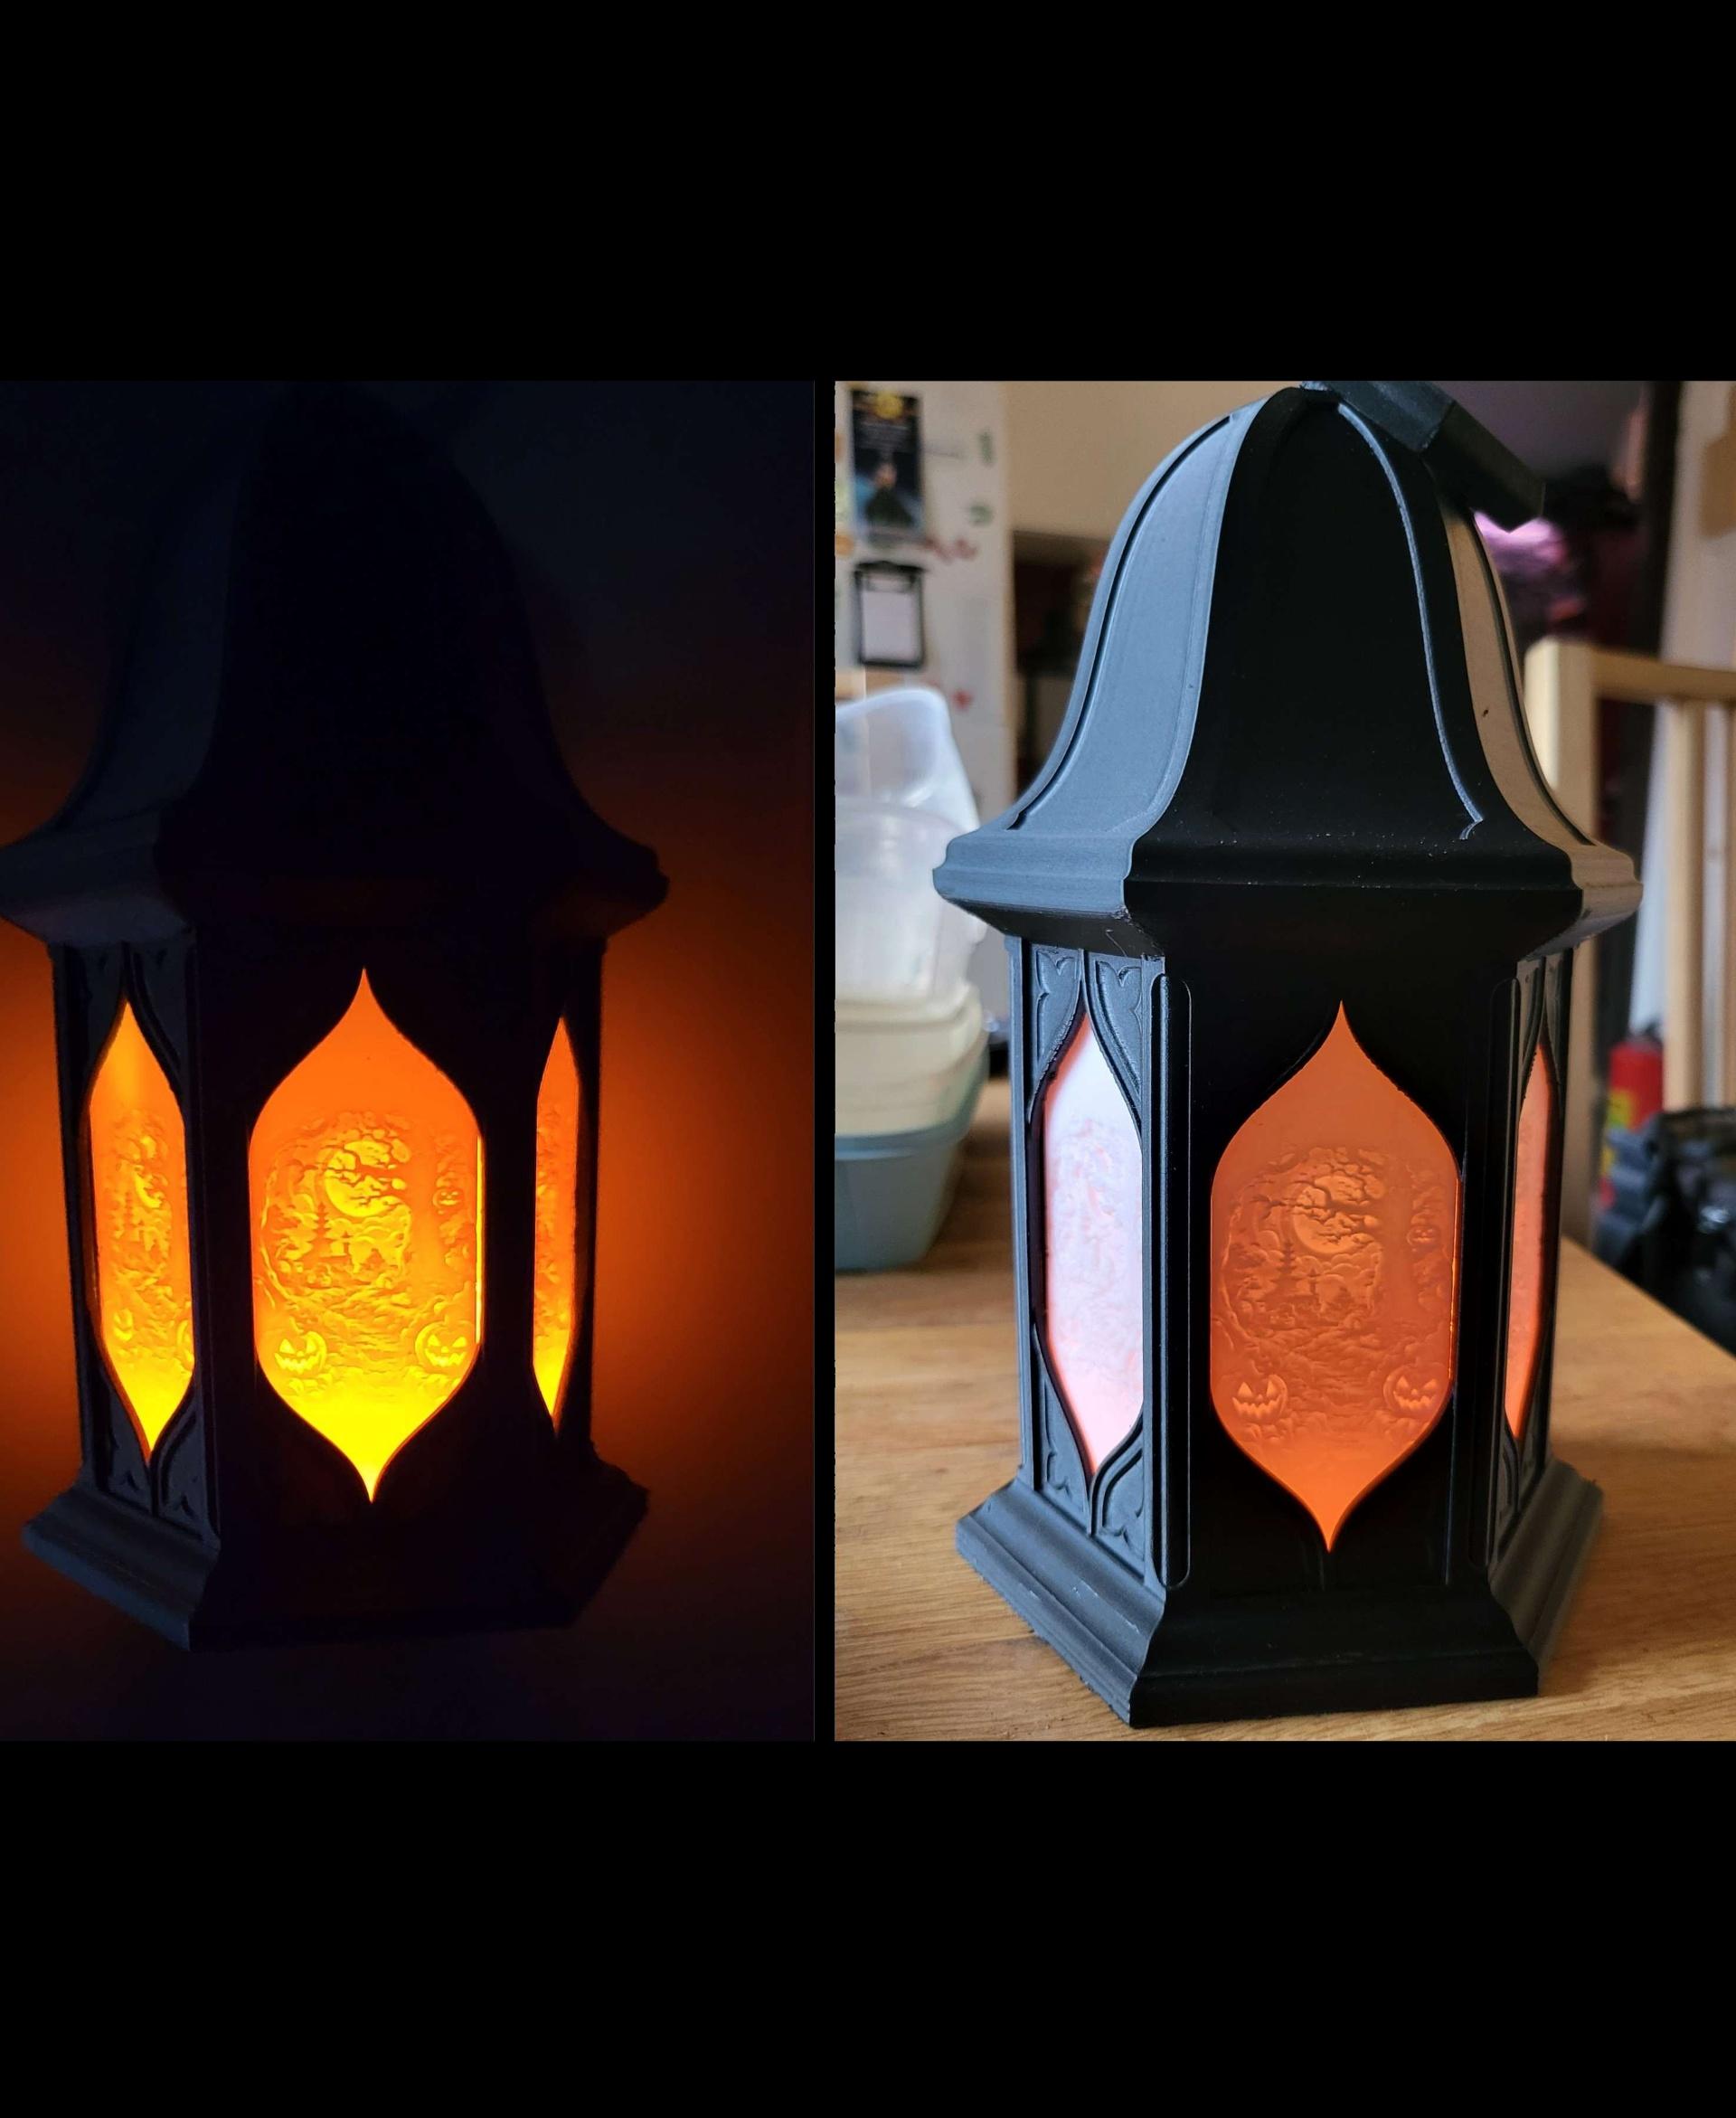 Gothic Lantern  - Great lantern. Made custom lithophane panels for it for some extra flare. - 3d model